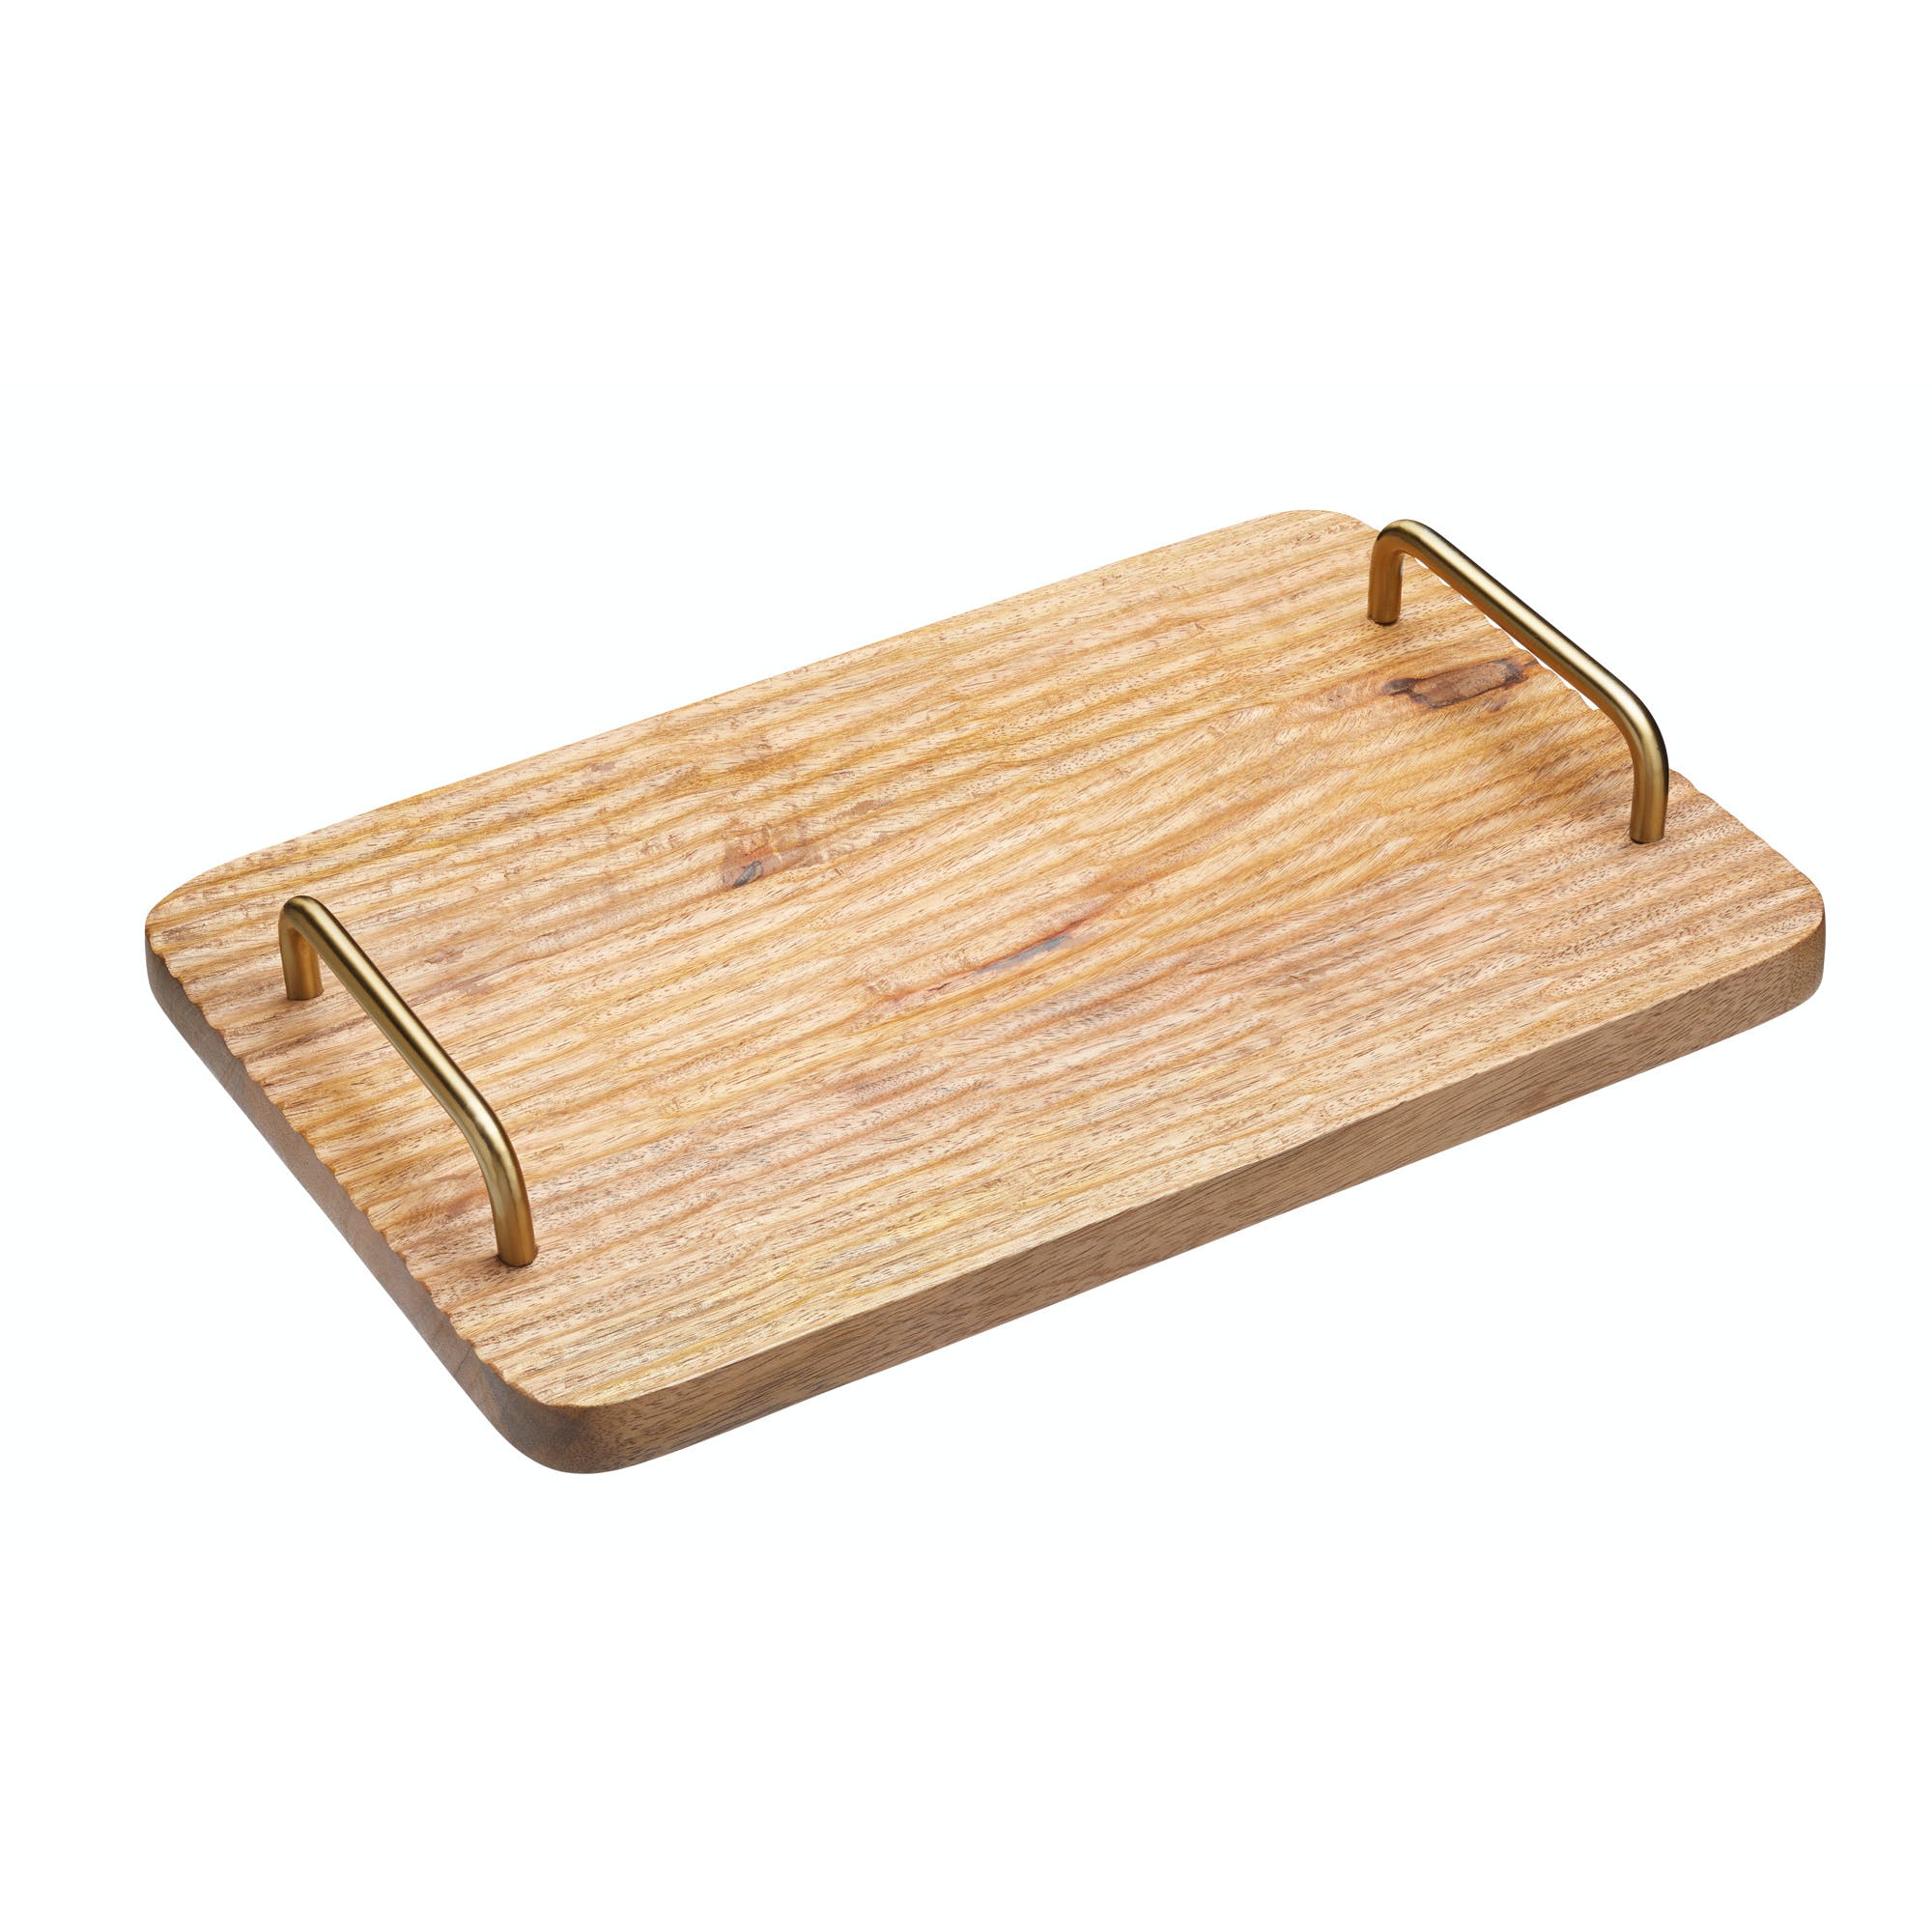 Artesà Wooden Cheese / Serving Board - The Cooks Cupboard Ltd